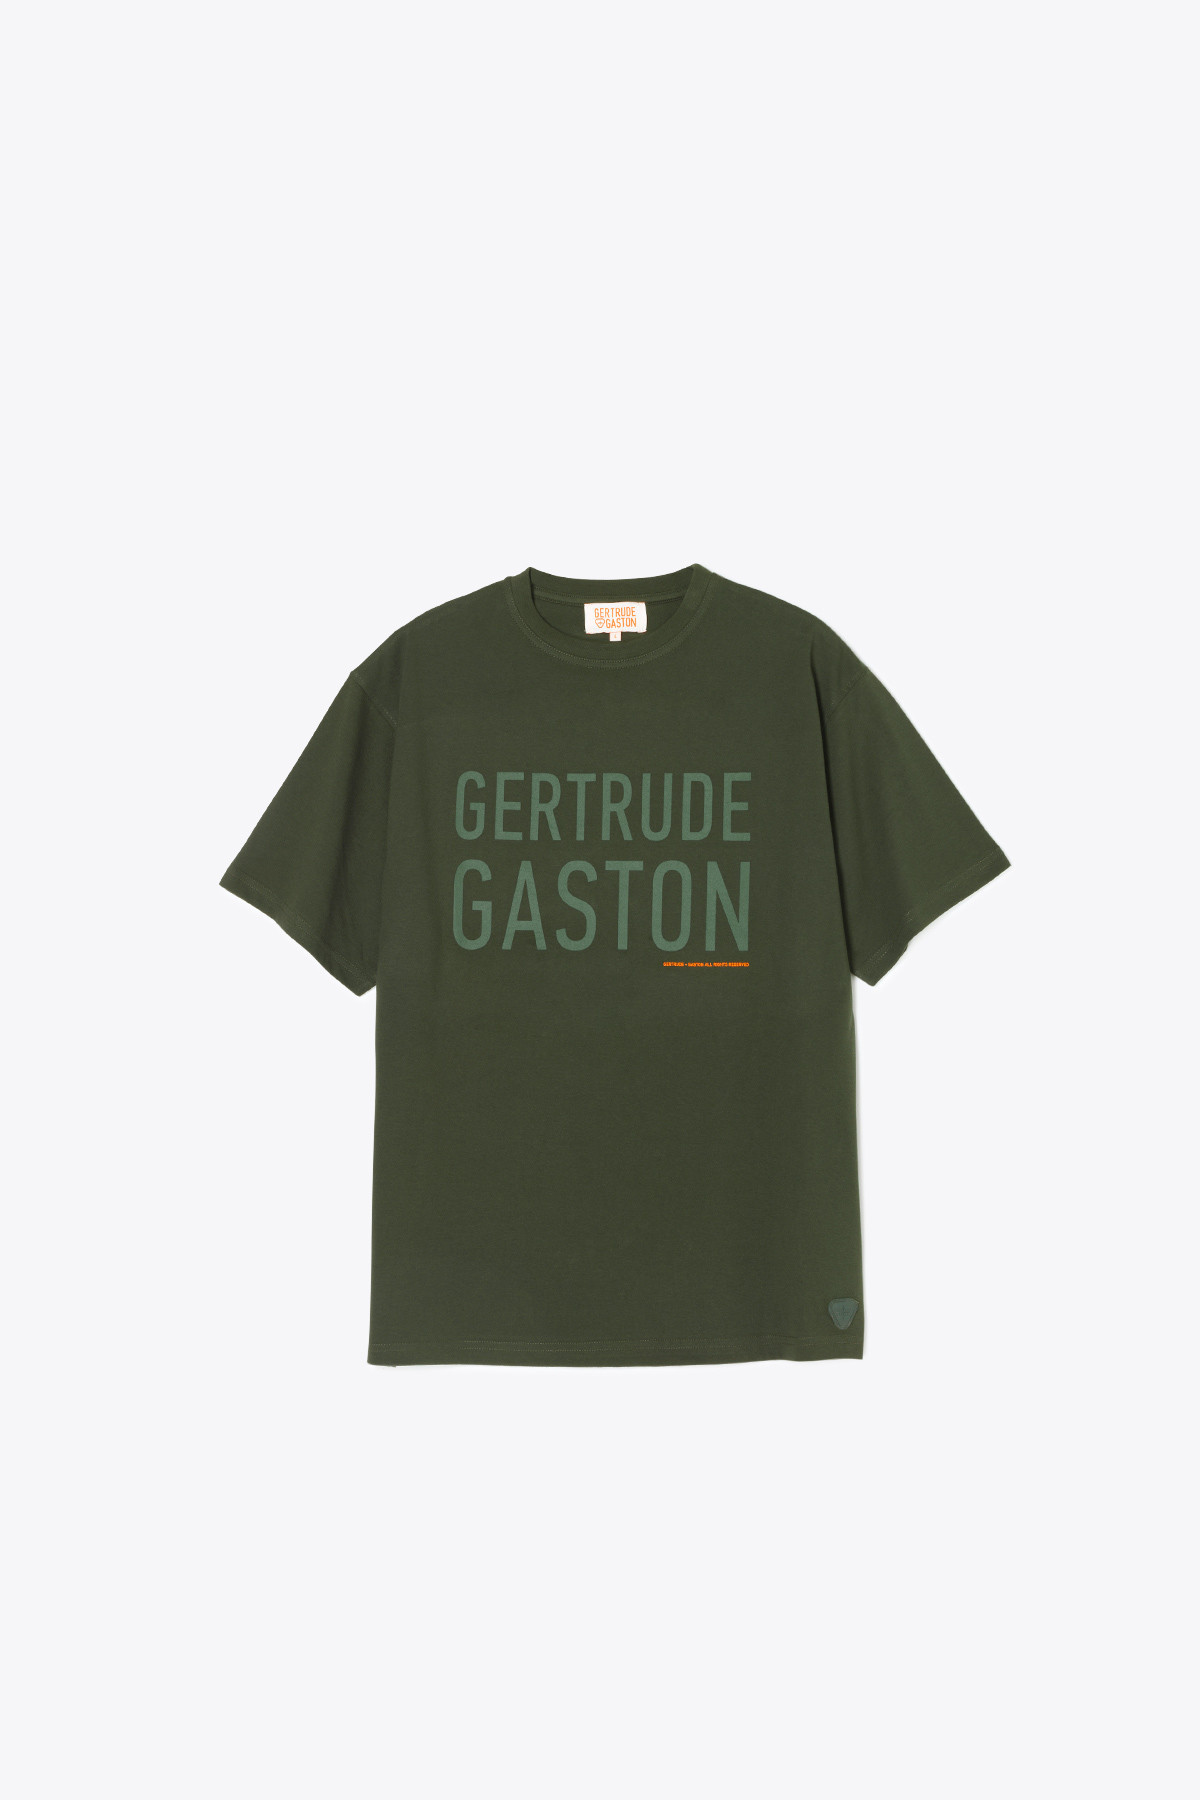 T-shirt col rond homme LEOPOLD kaki, GertrudeGaston